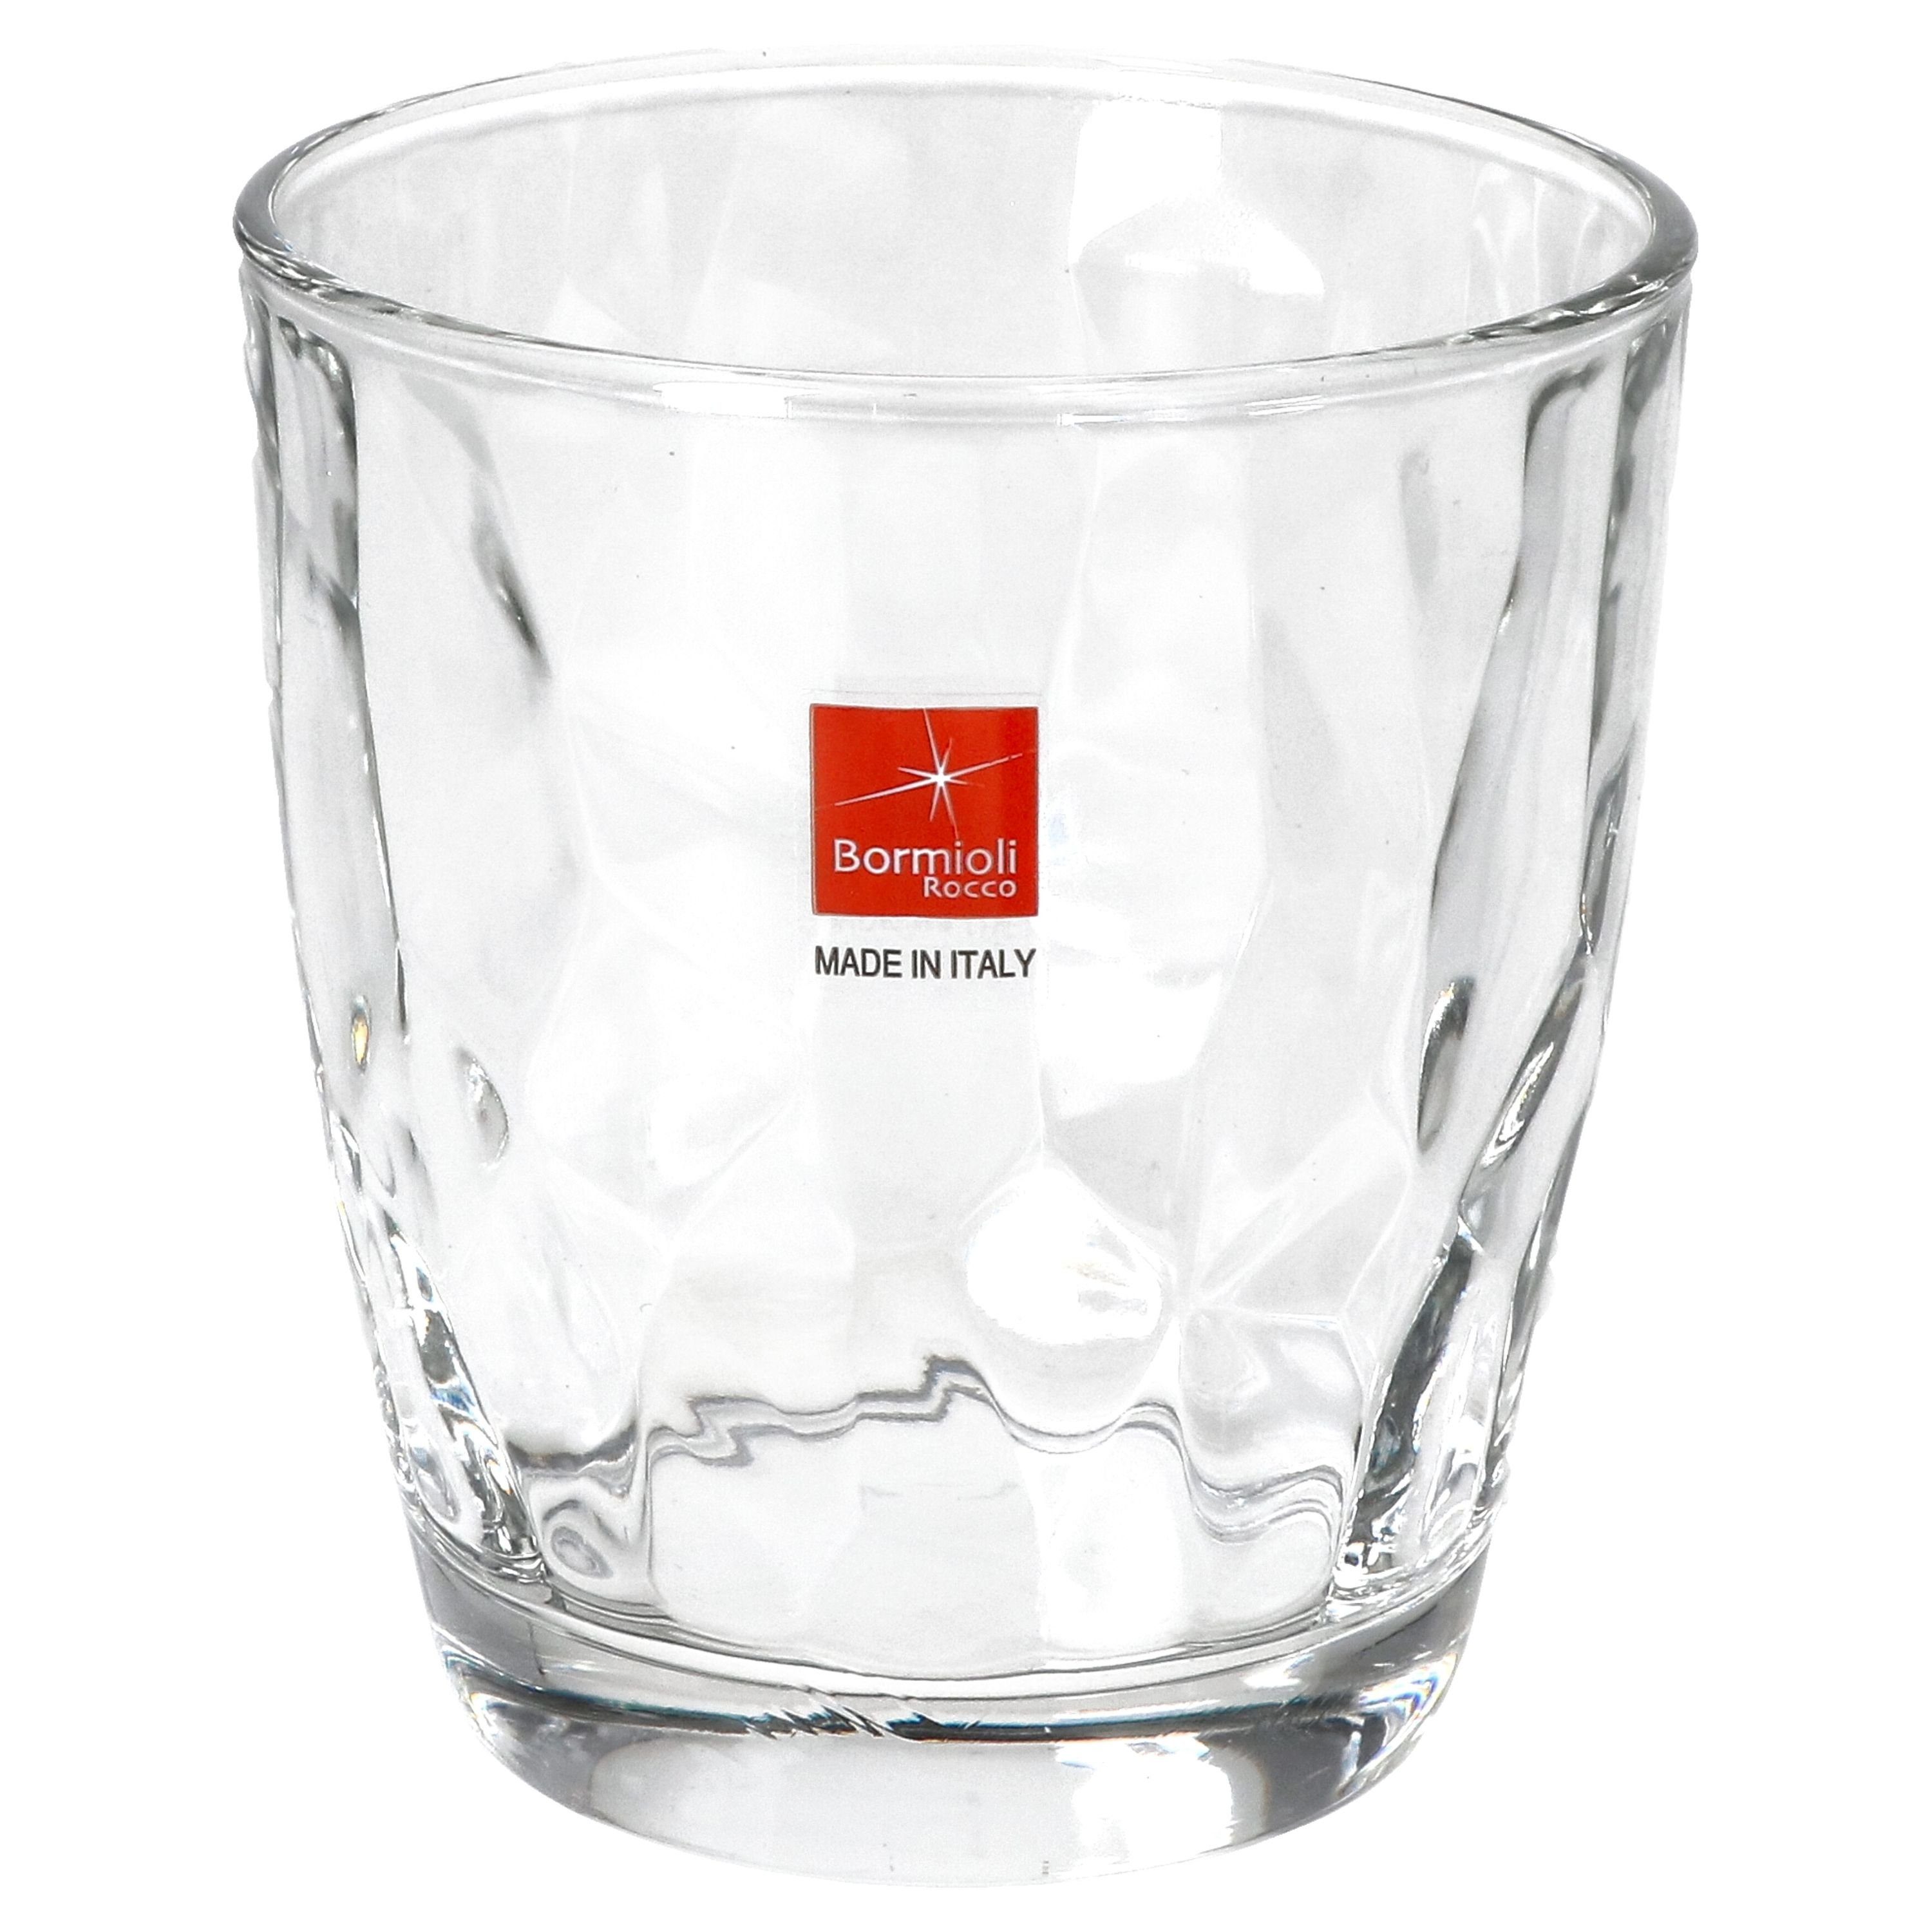 D.O.F. Whisky, 390ml Set MamboCat Glas Gin-Tumbler Glas Diamond 12er Trinkglas Transparent